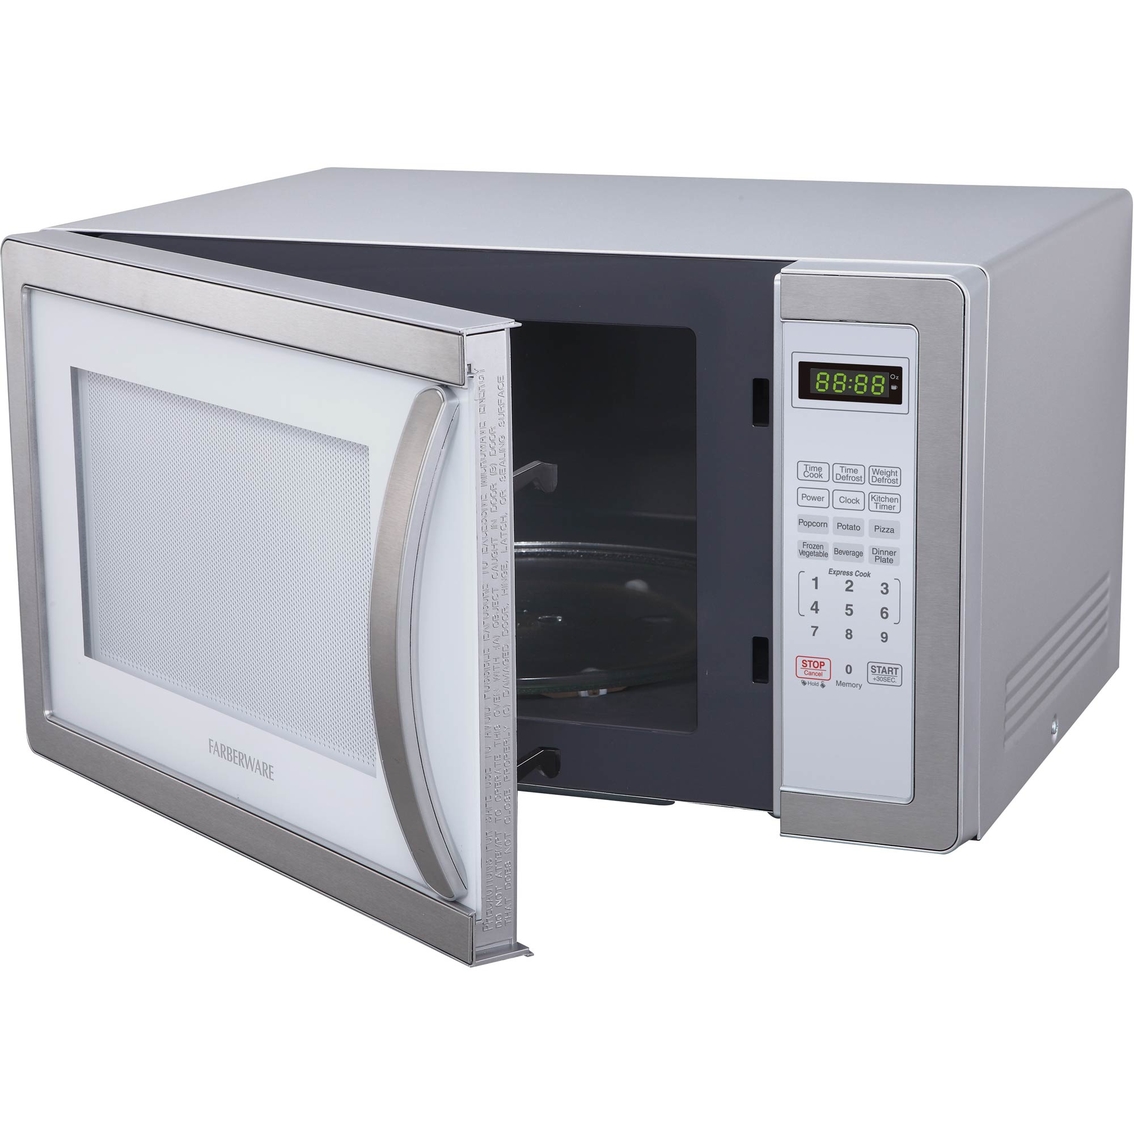 Farberware Classic 1.1 cu. ft. 1000 Watt Microwave Oven - Image 4 of 8